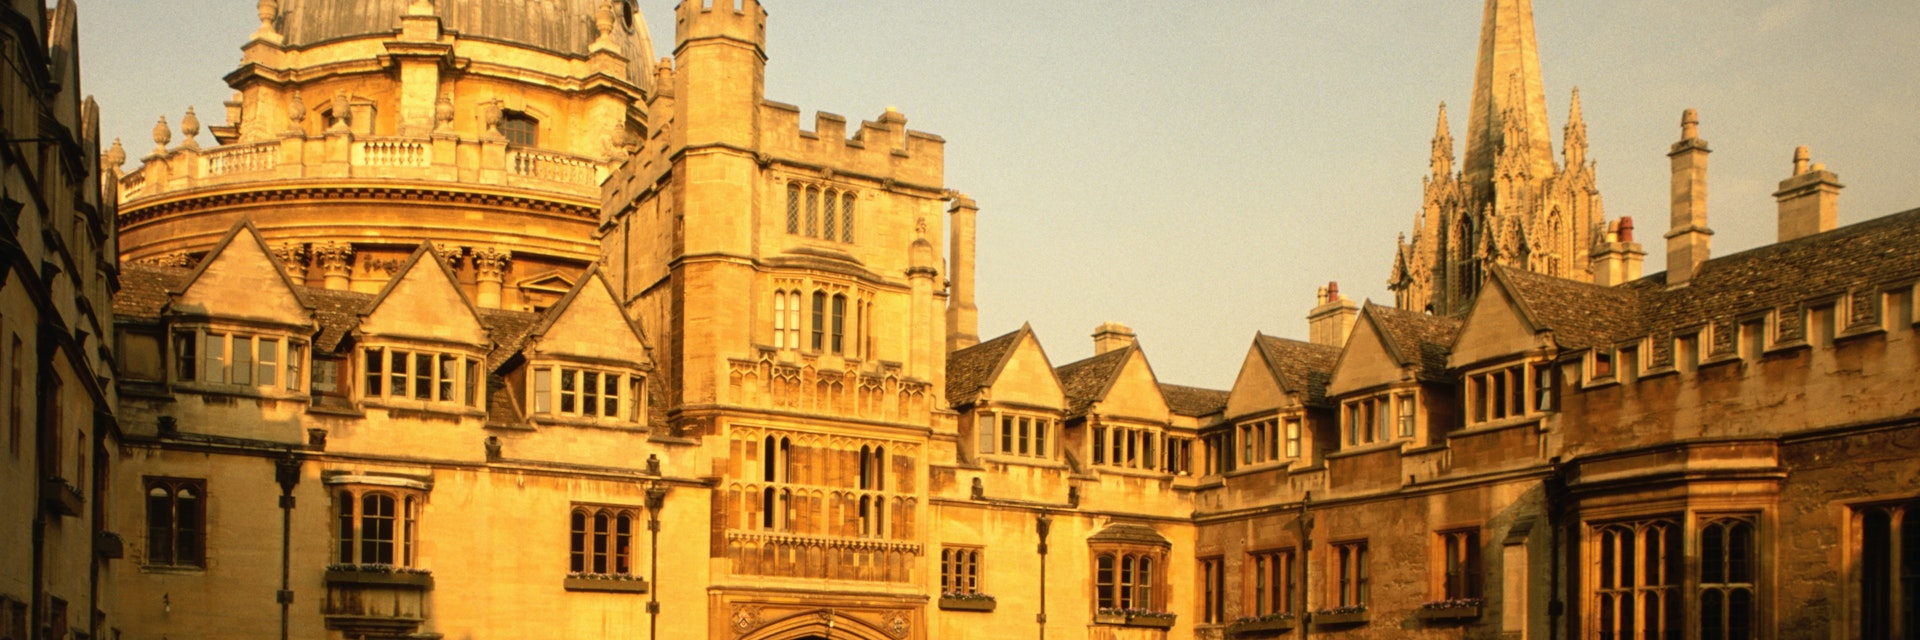 16th century Brasenose College.